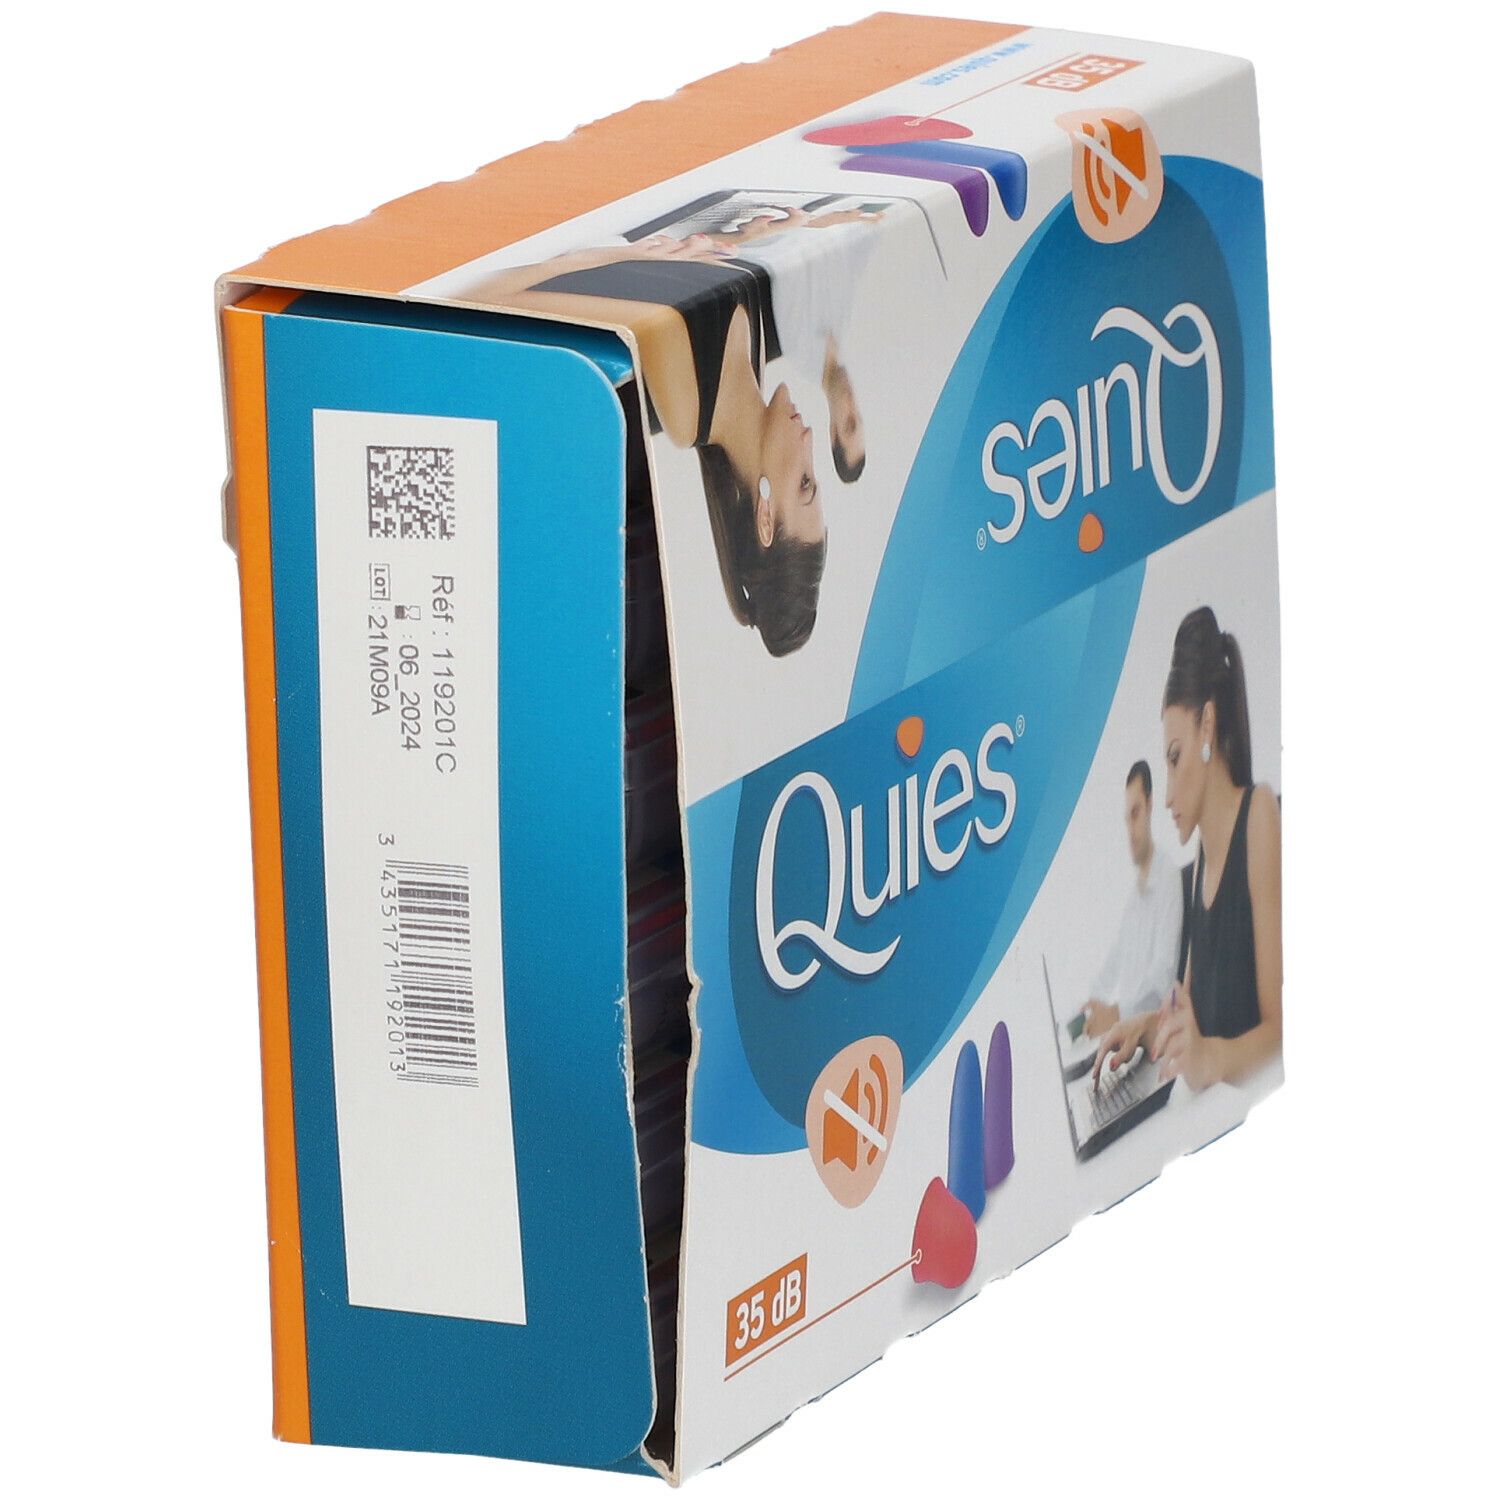 Quies® Mousse Disco Bouchons Auriculaire 6 pc(s) - Redcare Pharmacie